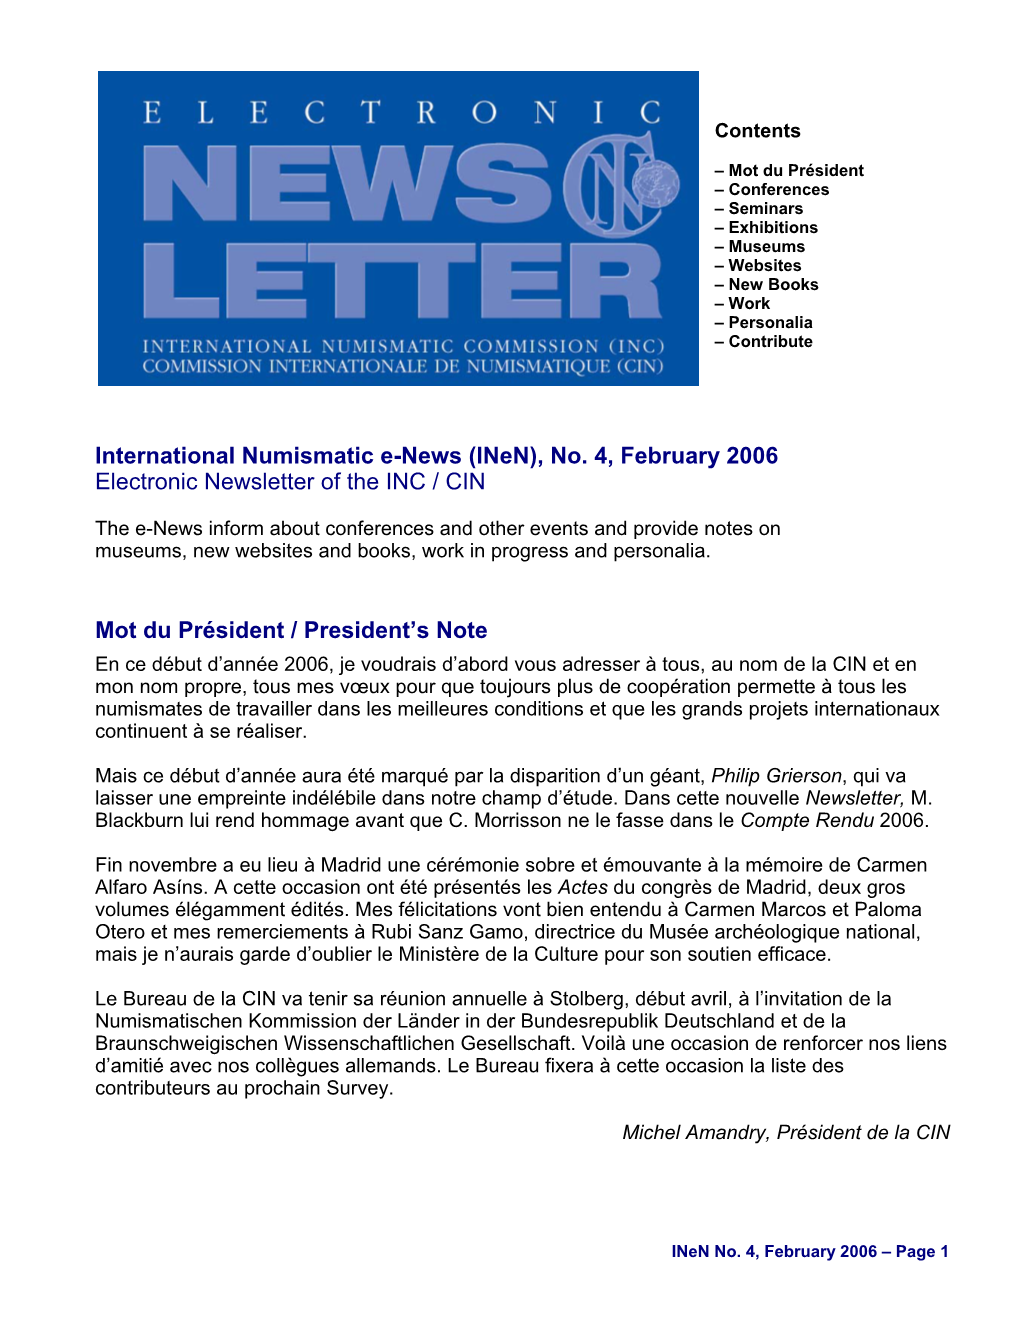 Internationai Numismatic E-News (Inen), No. 4, February 2006 Electronic Newsletter of the INC / CIN Mot Du Président / Presiden